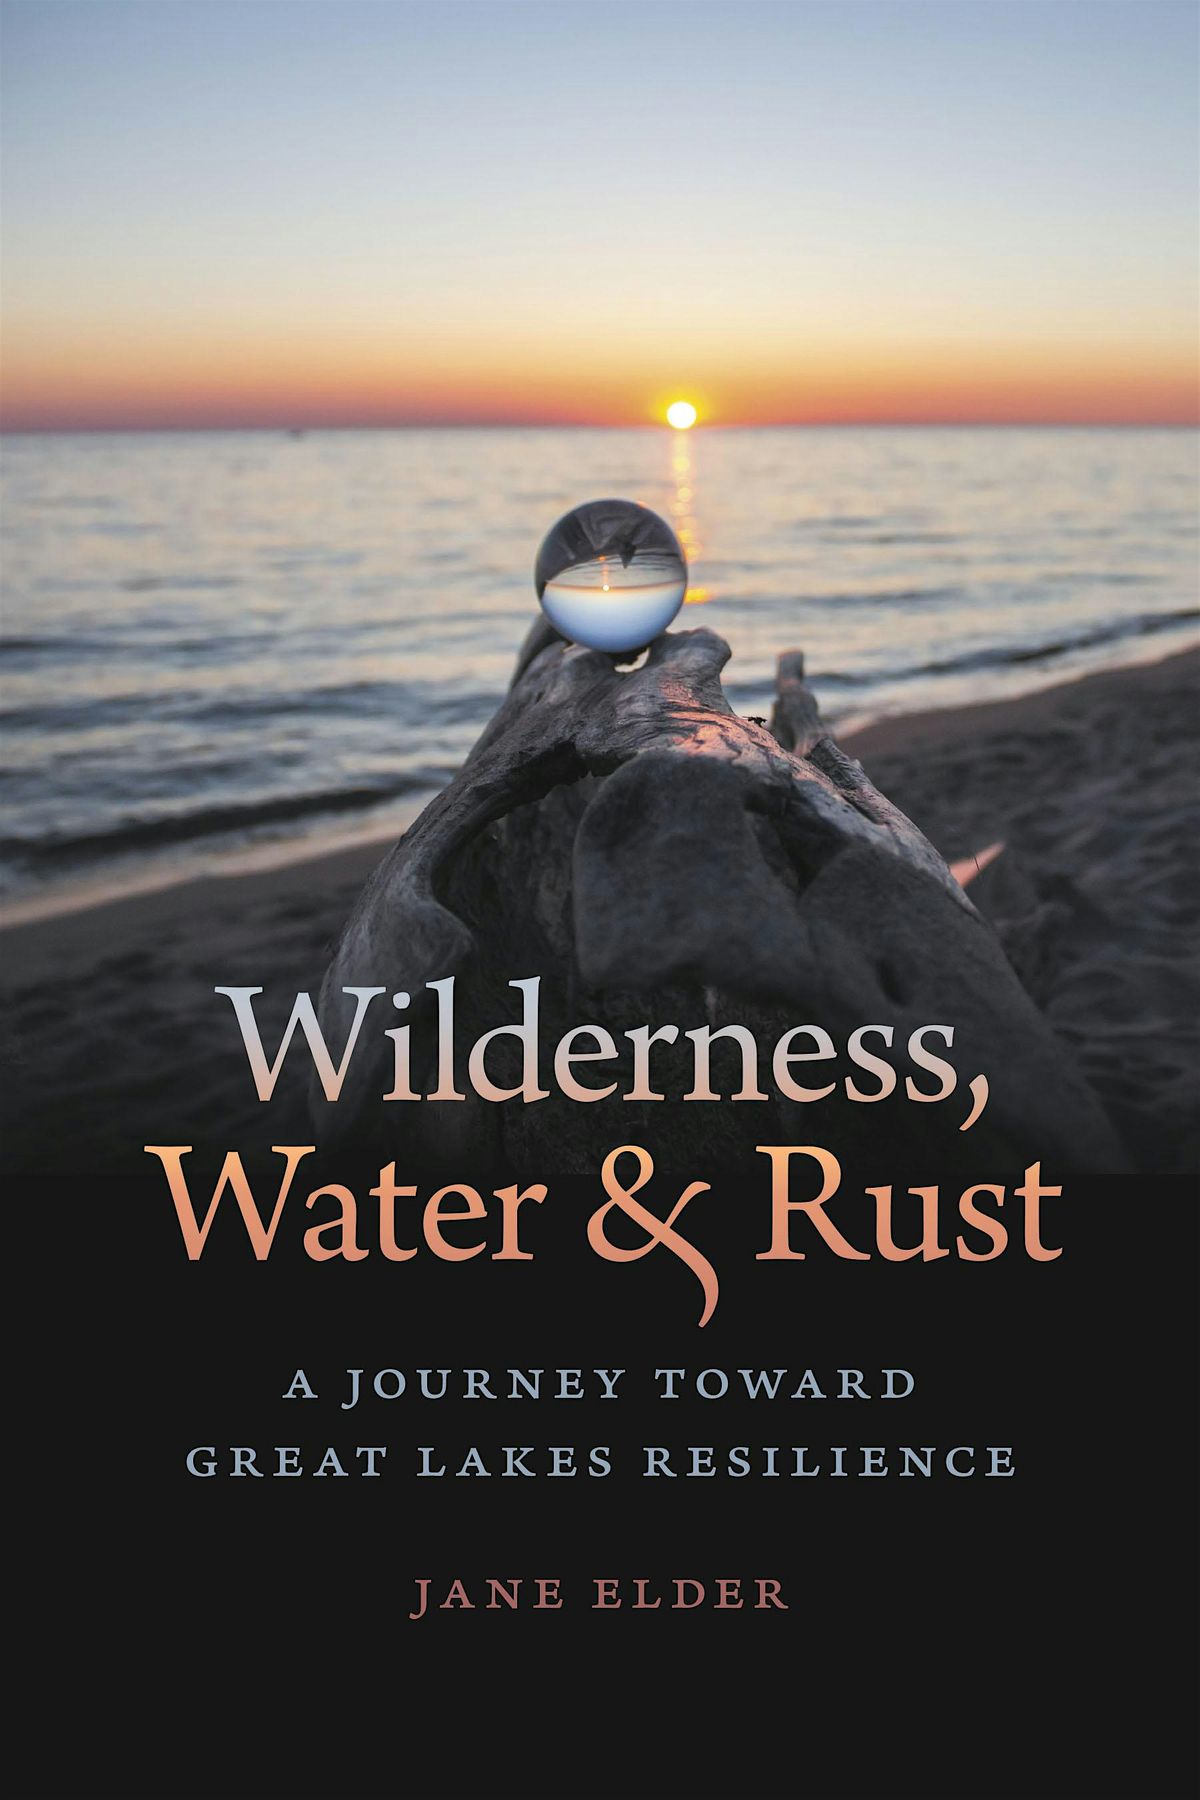 Wilderness, Water & Rust book launch